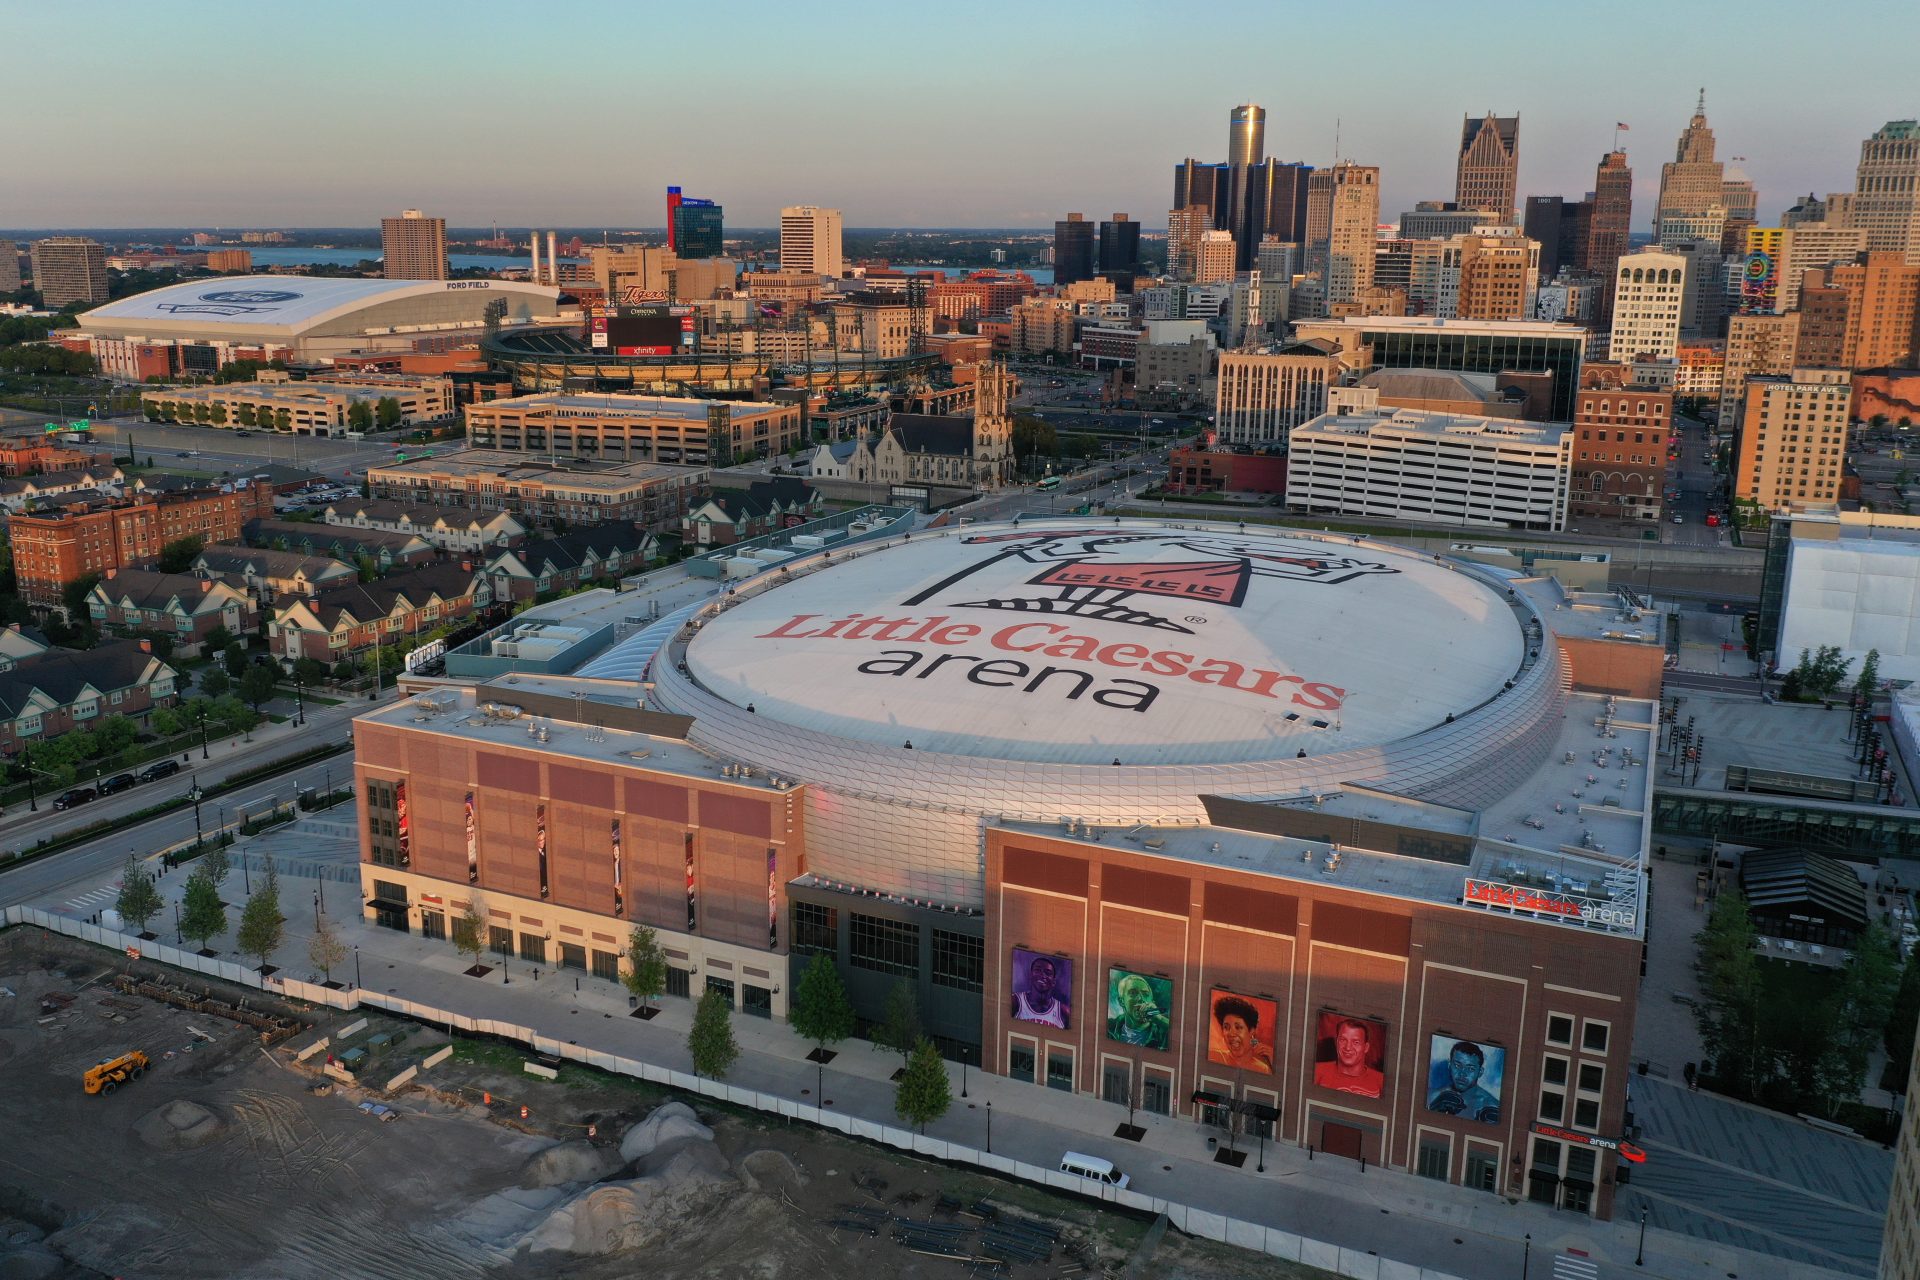 2019 VenuesNow AllStars Arena Little Caesars Arena, Detroit VenuesNow